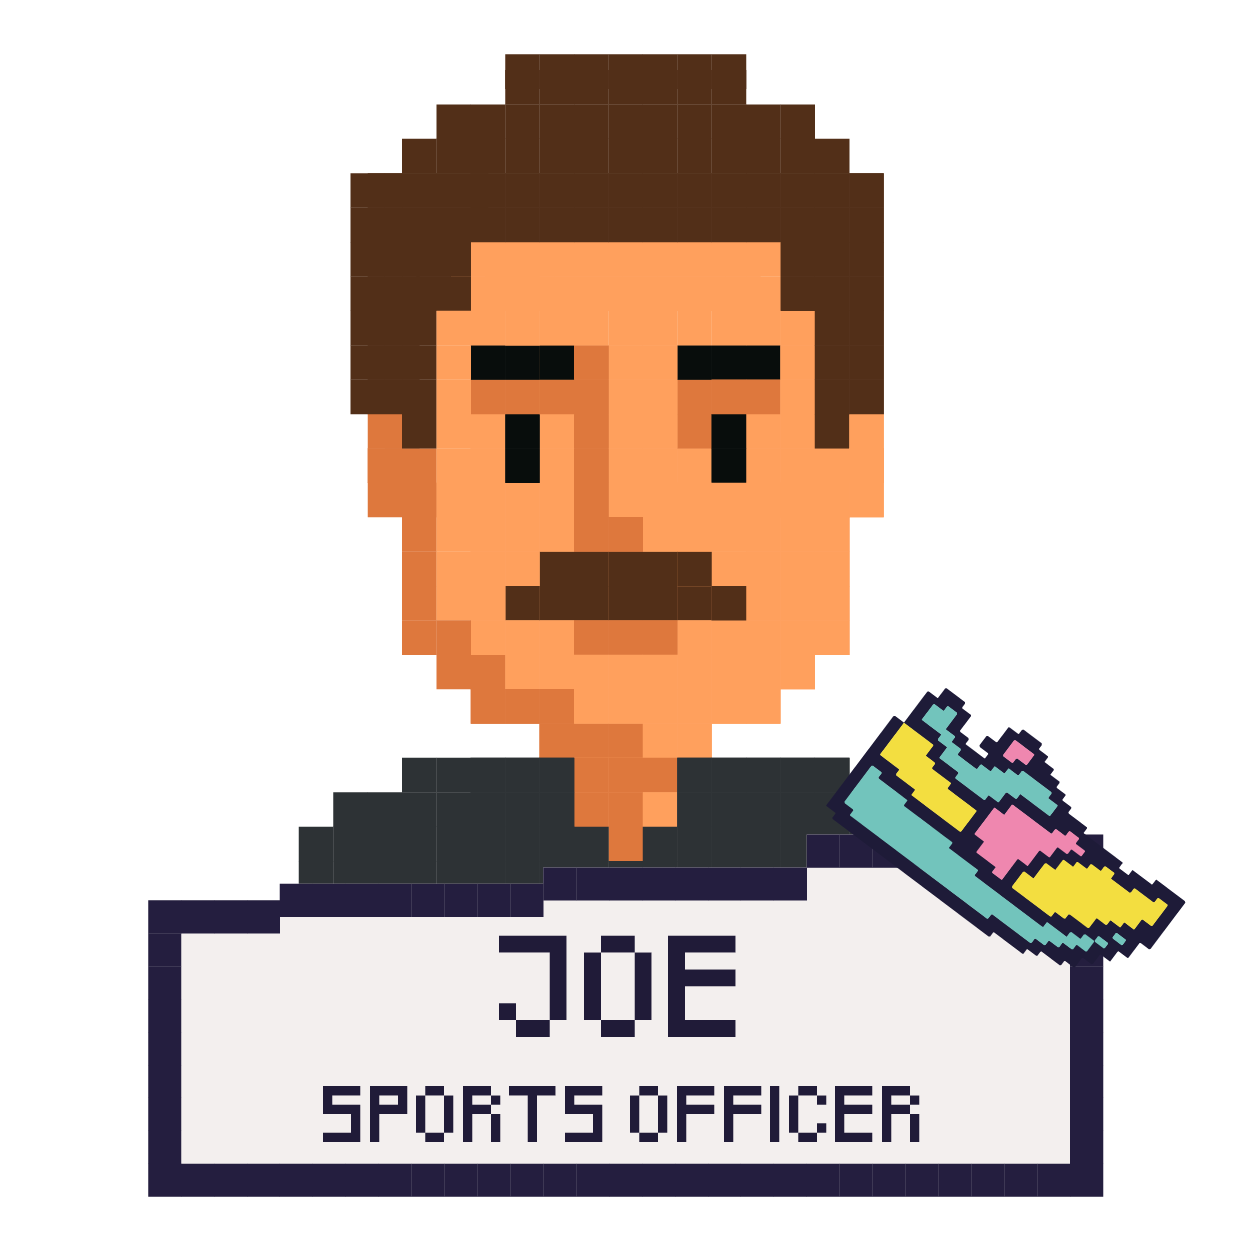 Image of Sports Officer Joe Hyett he/him, click for his full profile